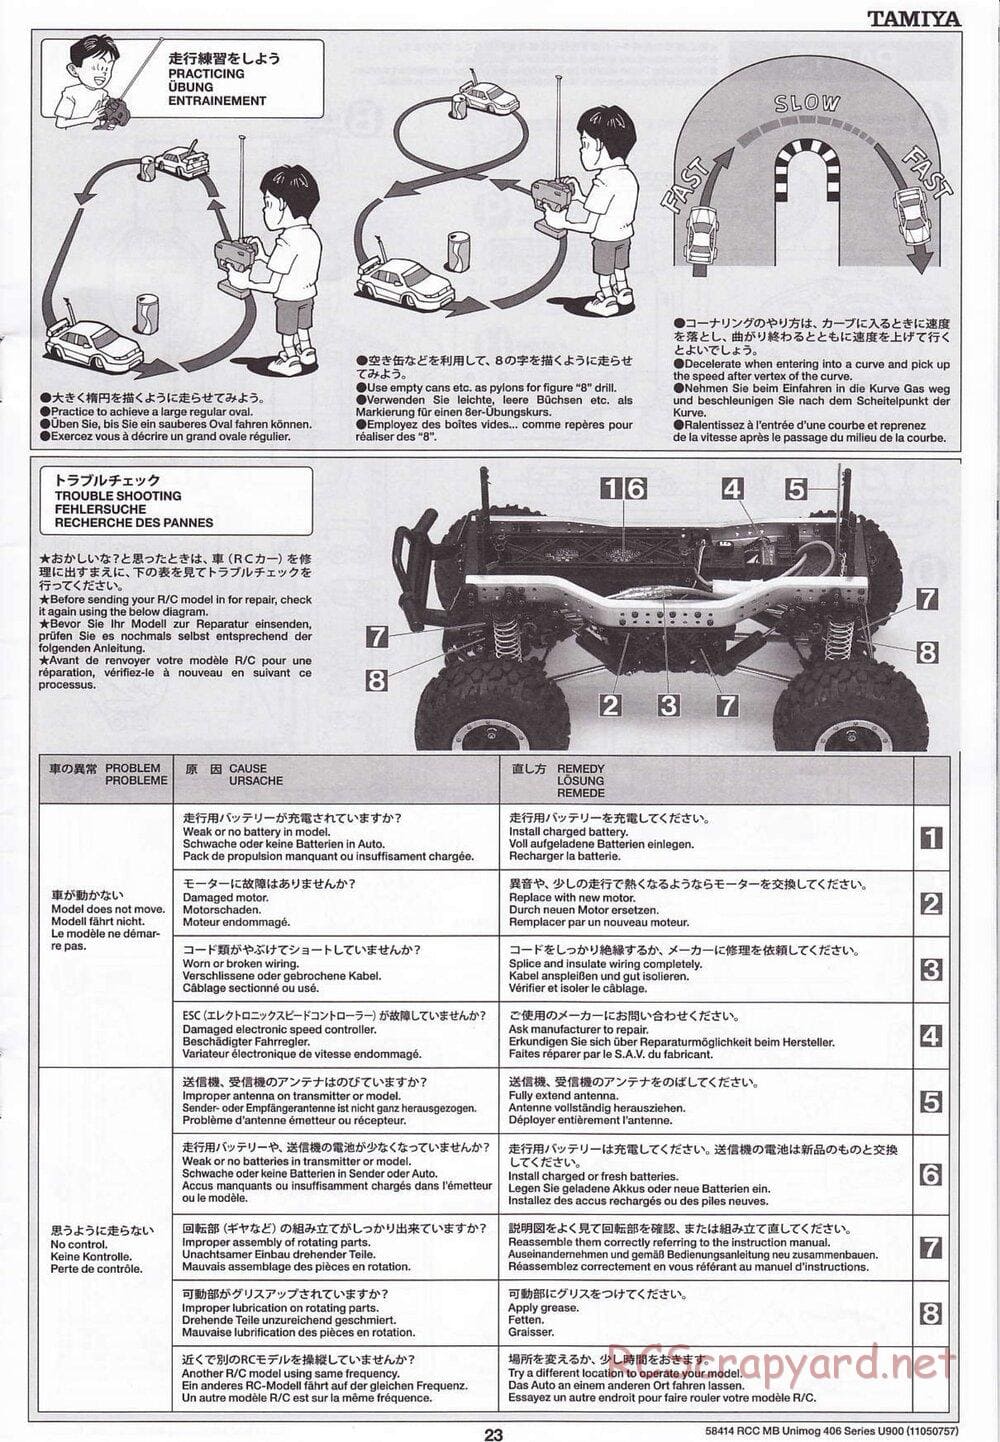 Tamiya - Mercedes-Benz Unimog 406 Series U900 - CR-01 Chassis - Manual - Page 23